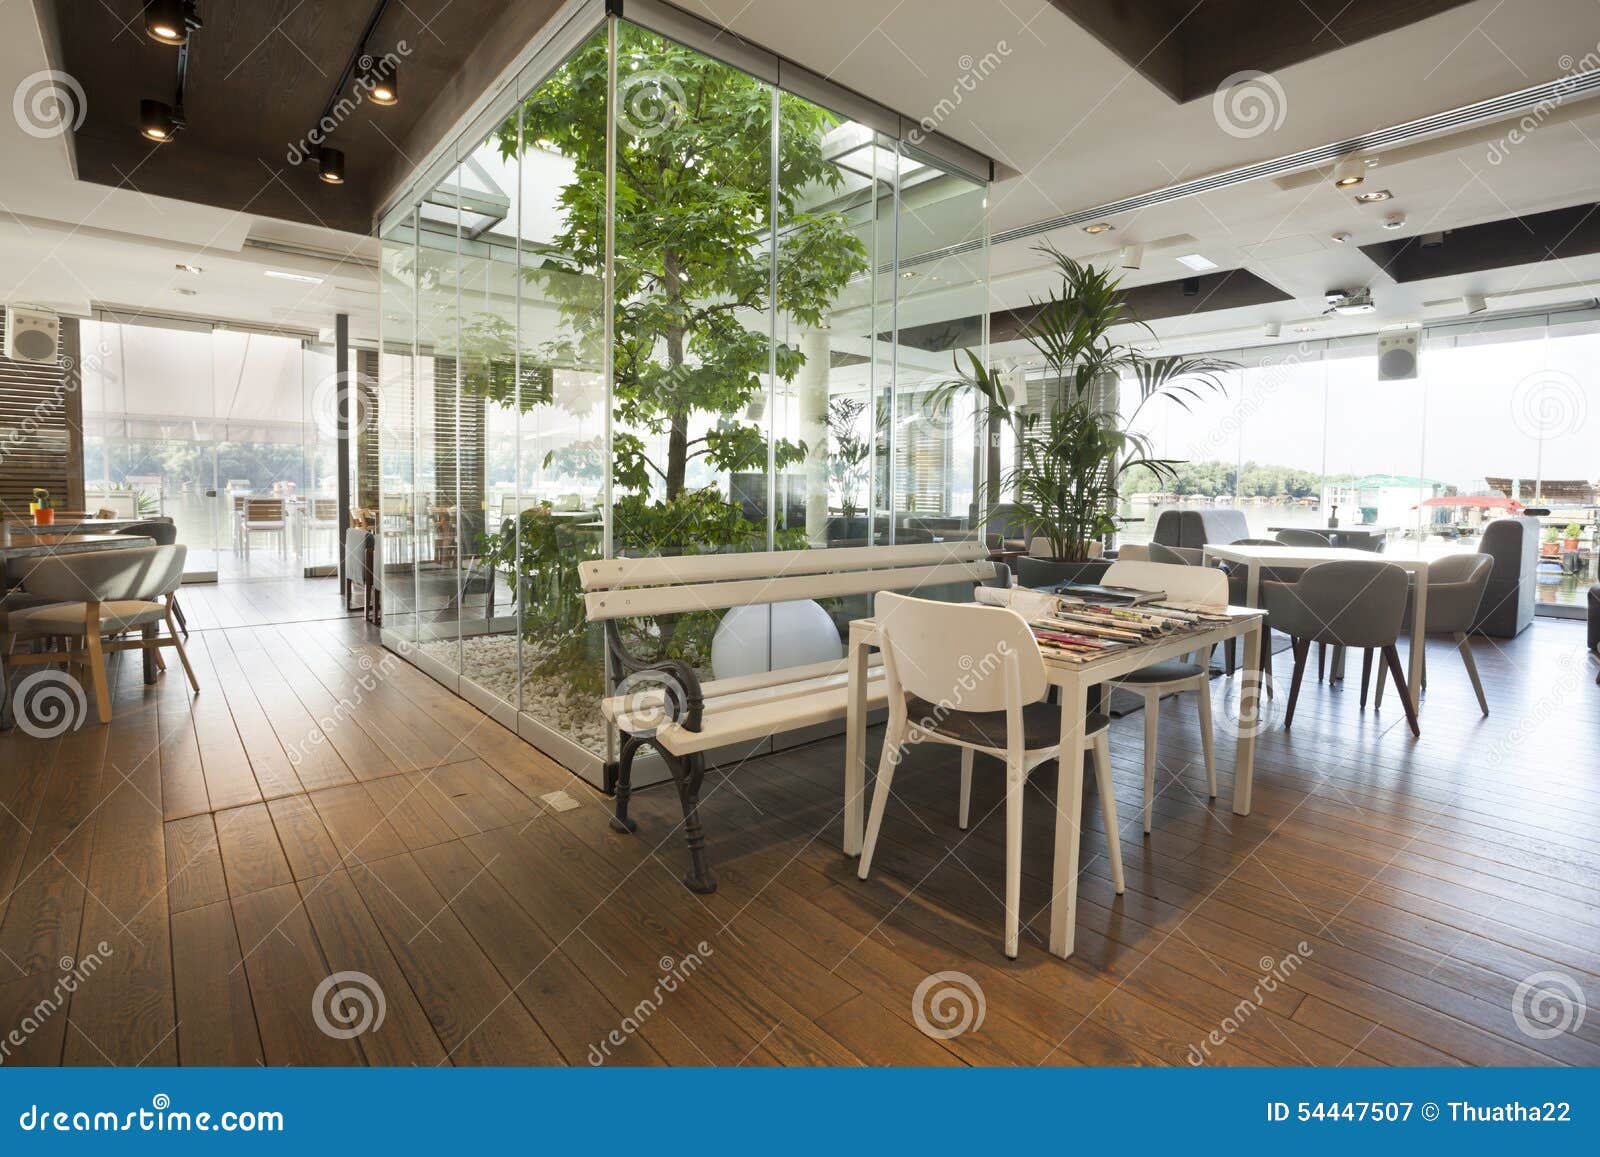 beautiful cafe interior tree 54447507